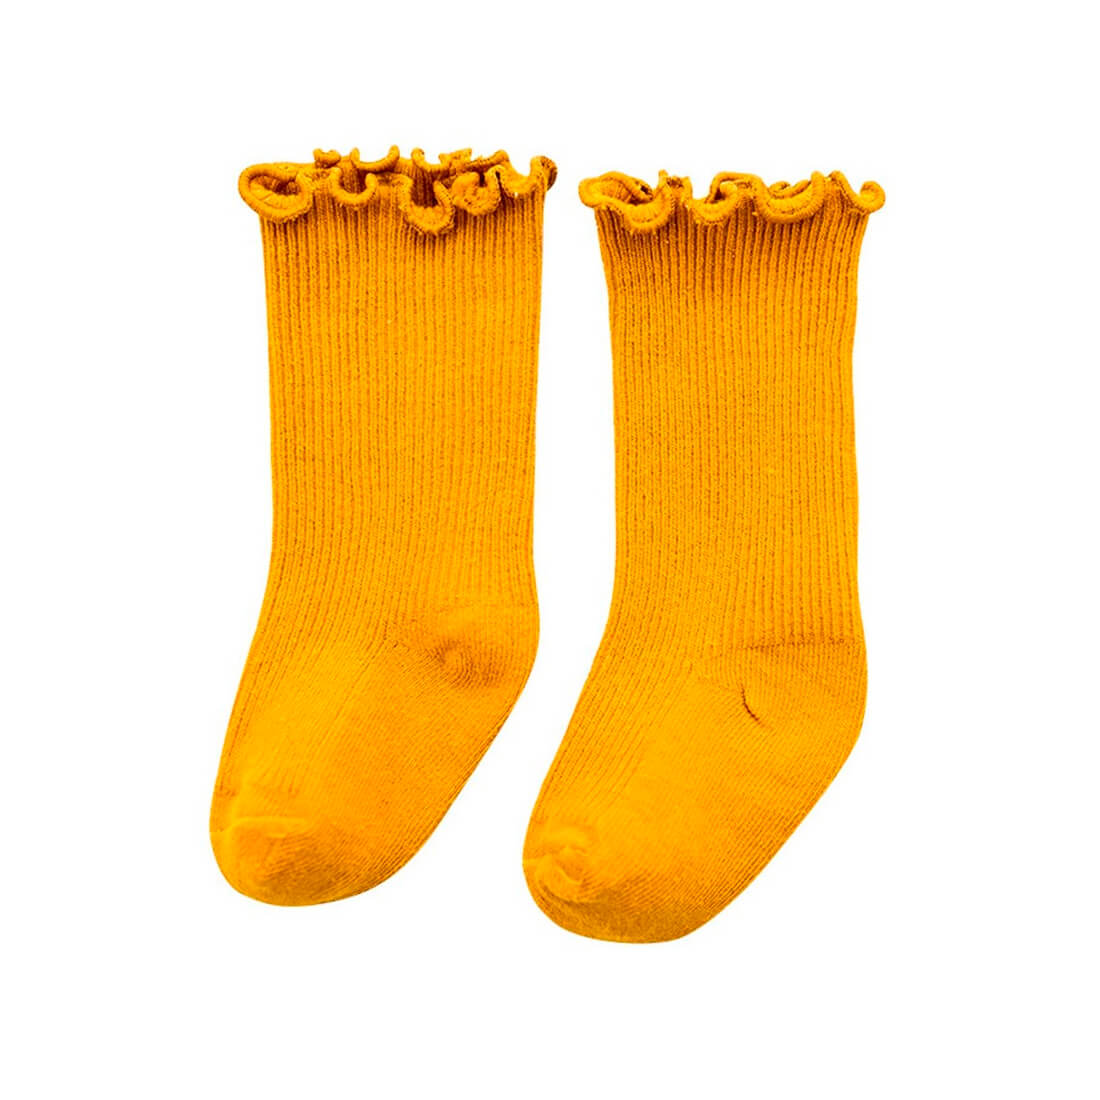 Solid Ruffled Socks Yellow 0-12 M 